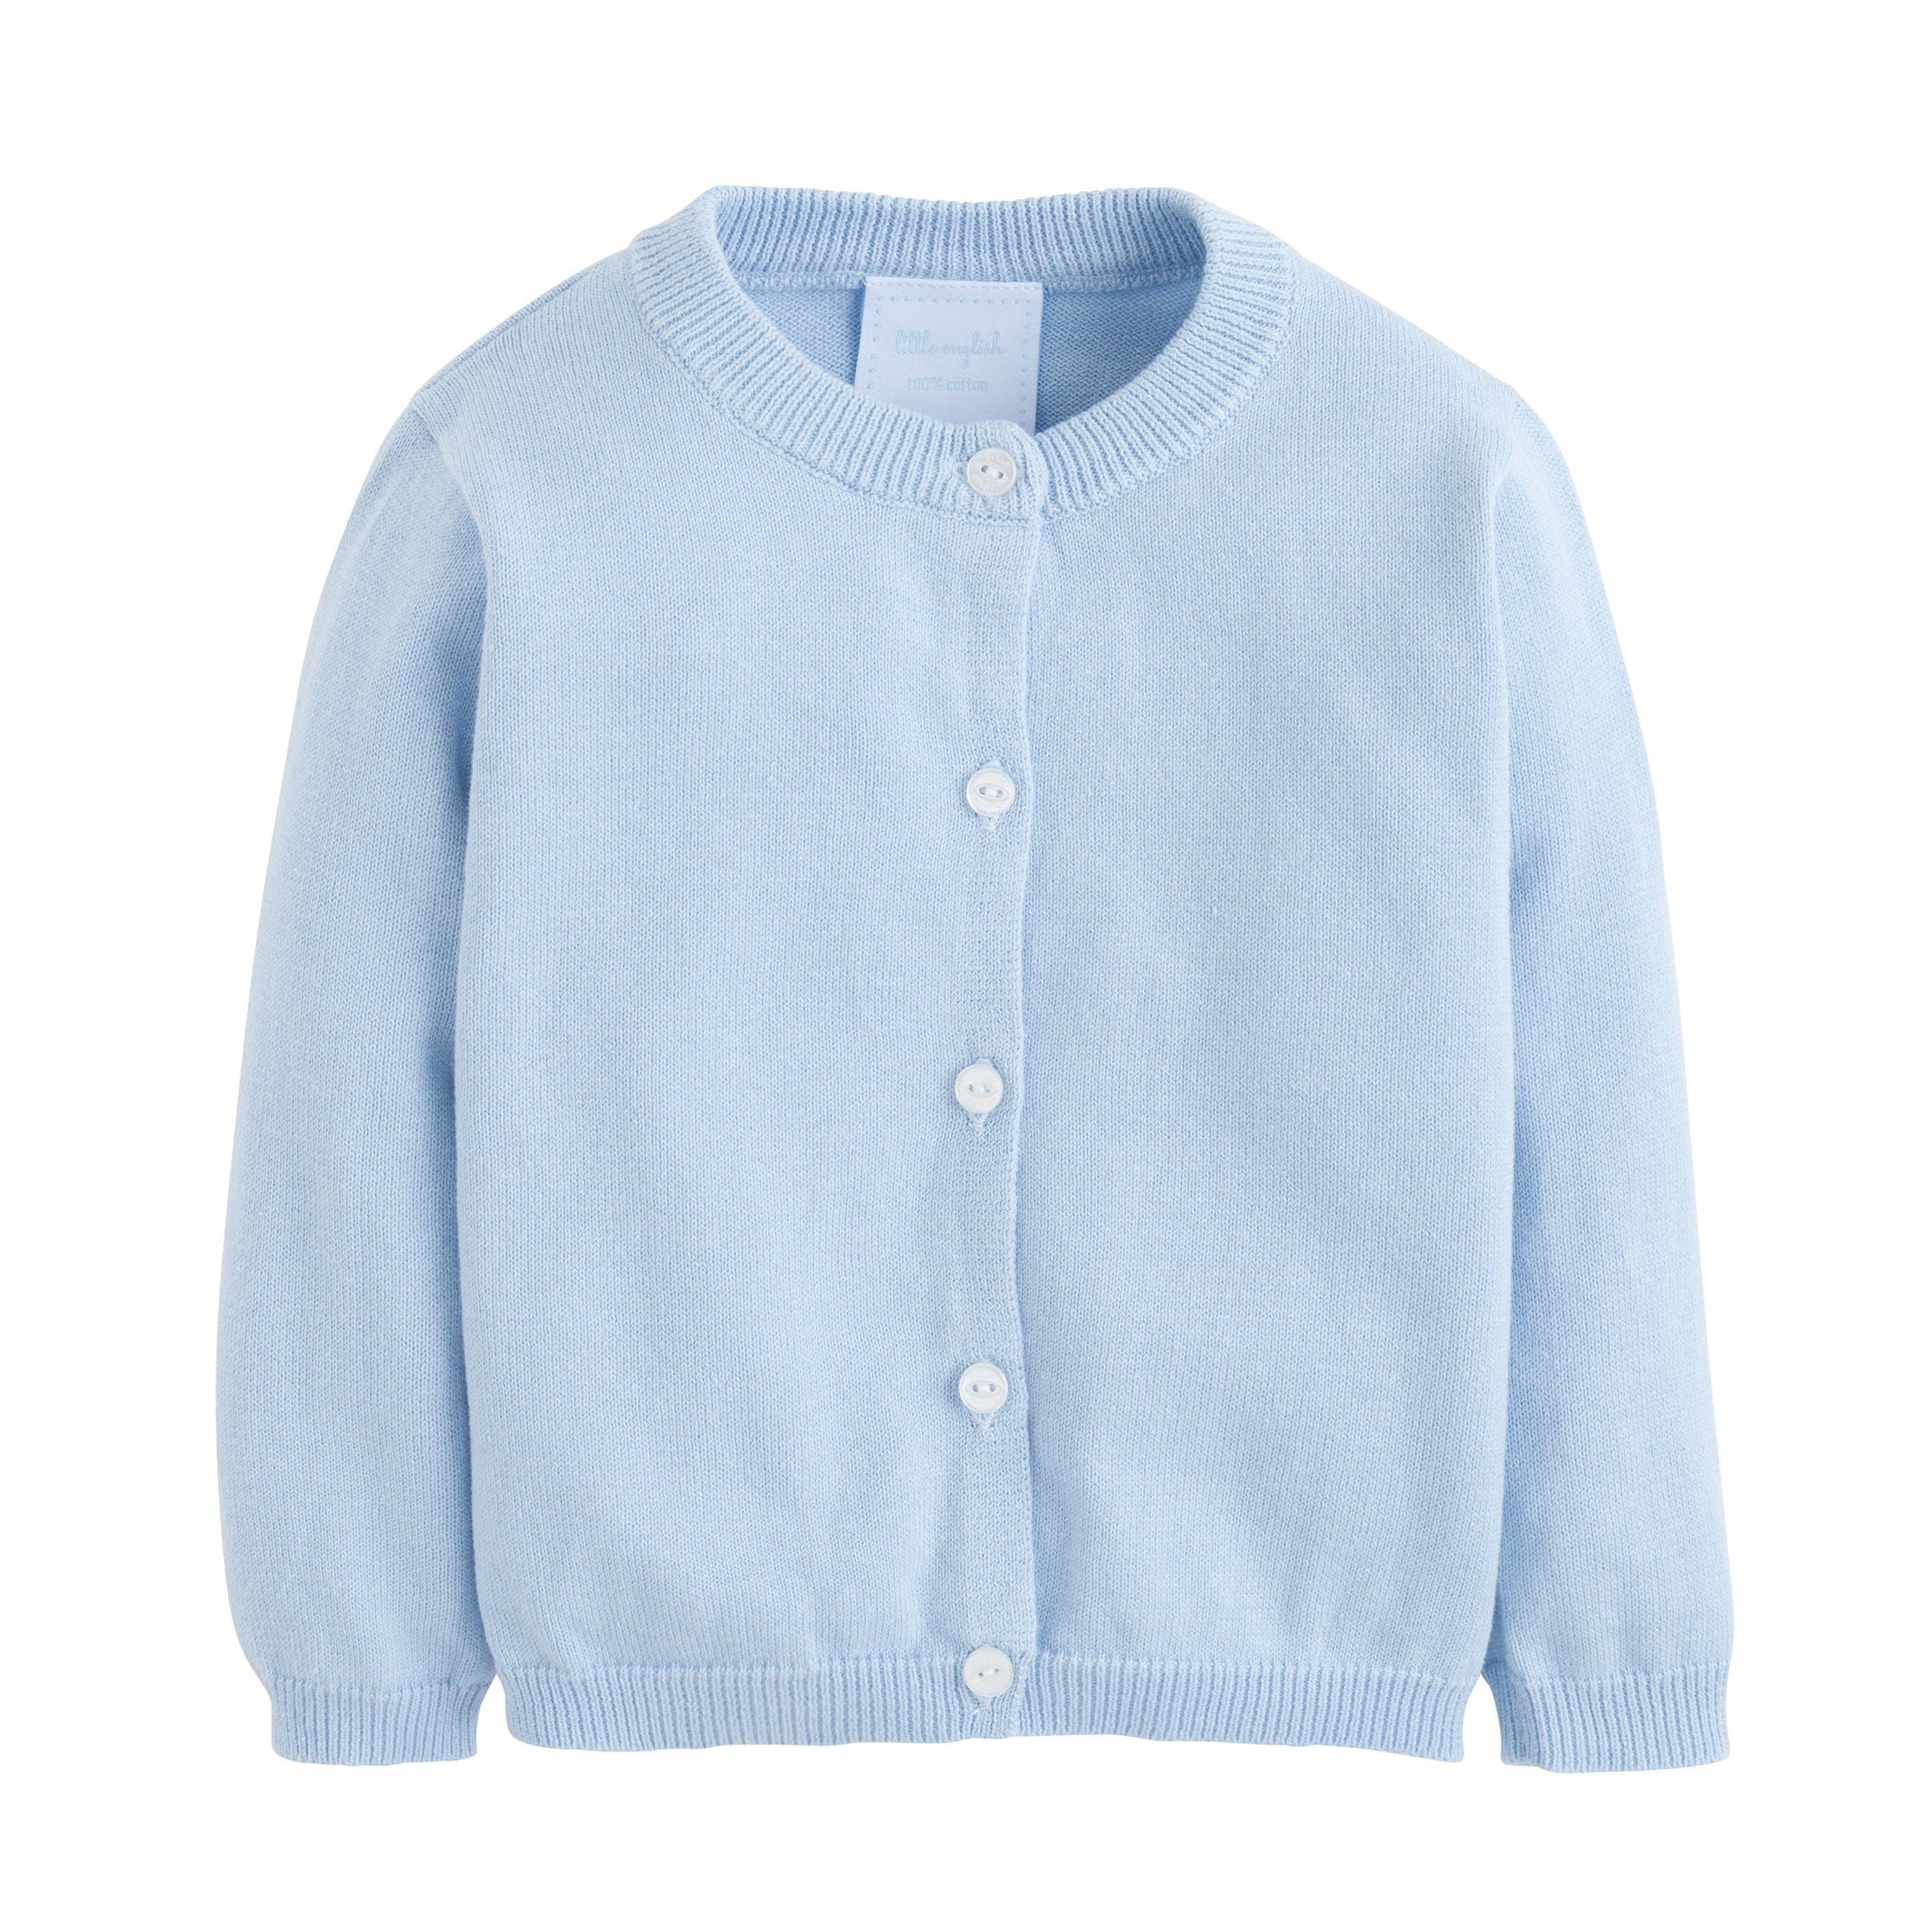 Boy & Girl Light - English Sweater Little Kids – Blue Cardigan